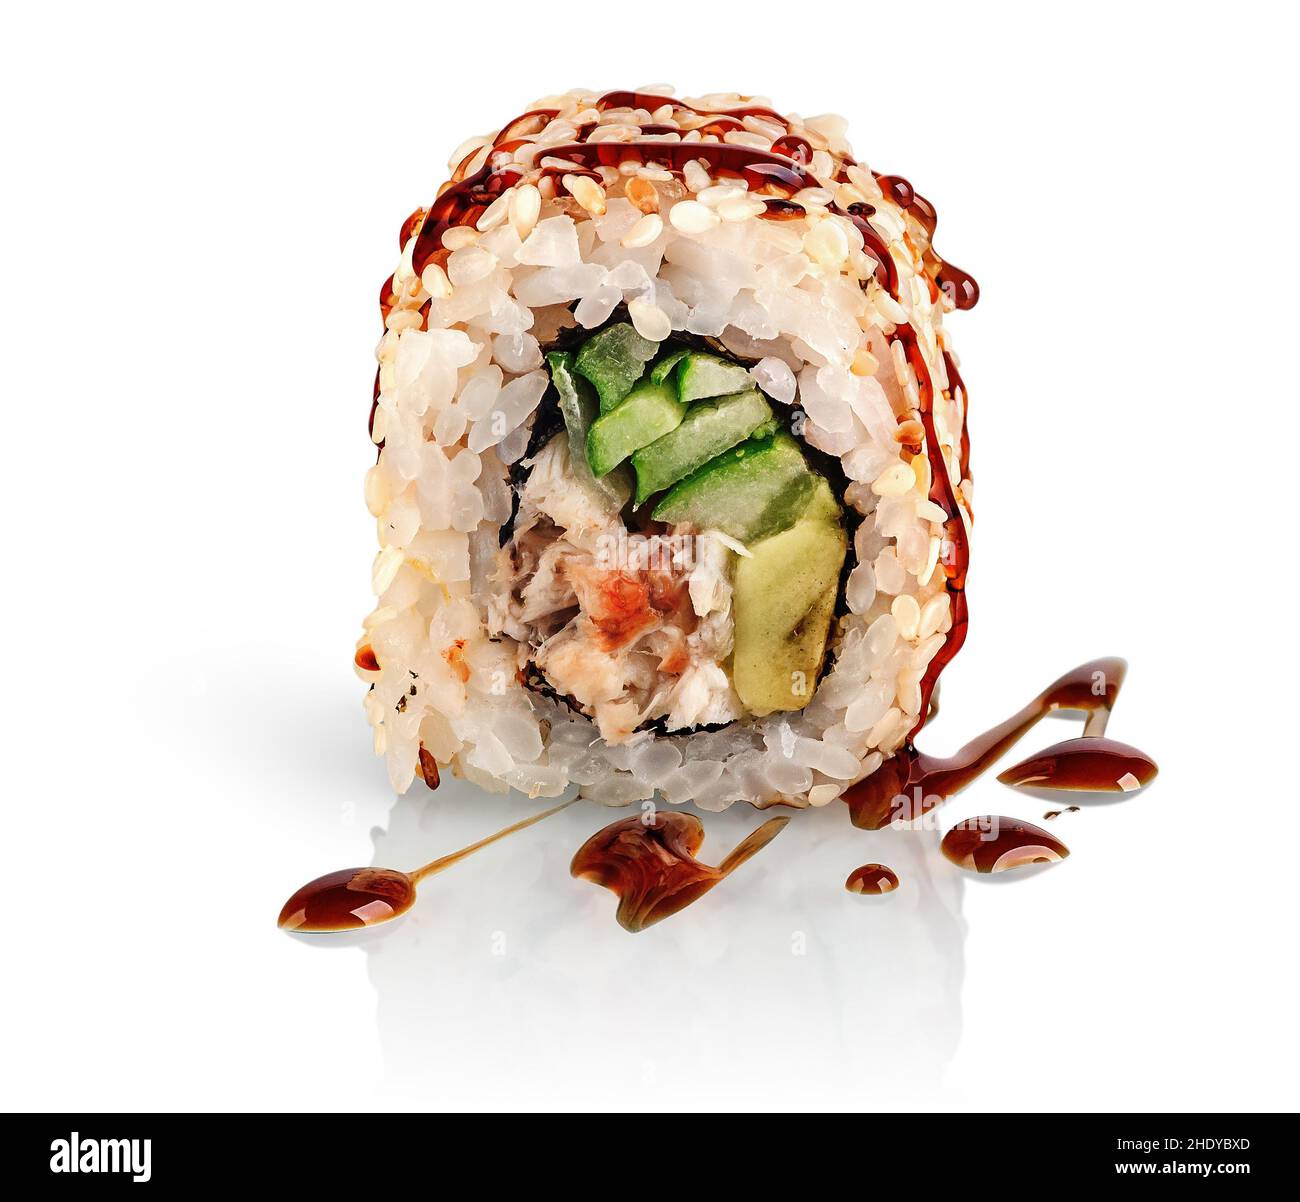 https://c8.alamy.com/comp/2HDYBXD/sushi-inside-out-rolls-uramaki-sushis-uramakis-2HDYBXD.jpg